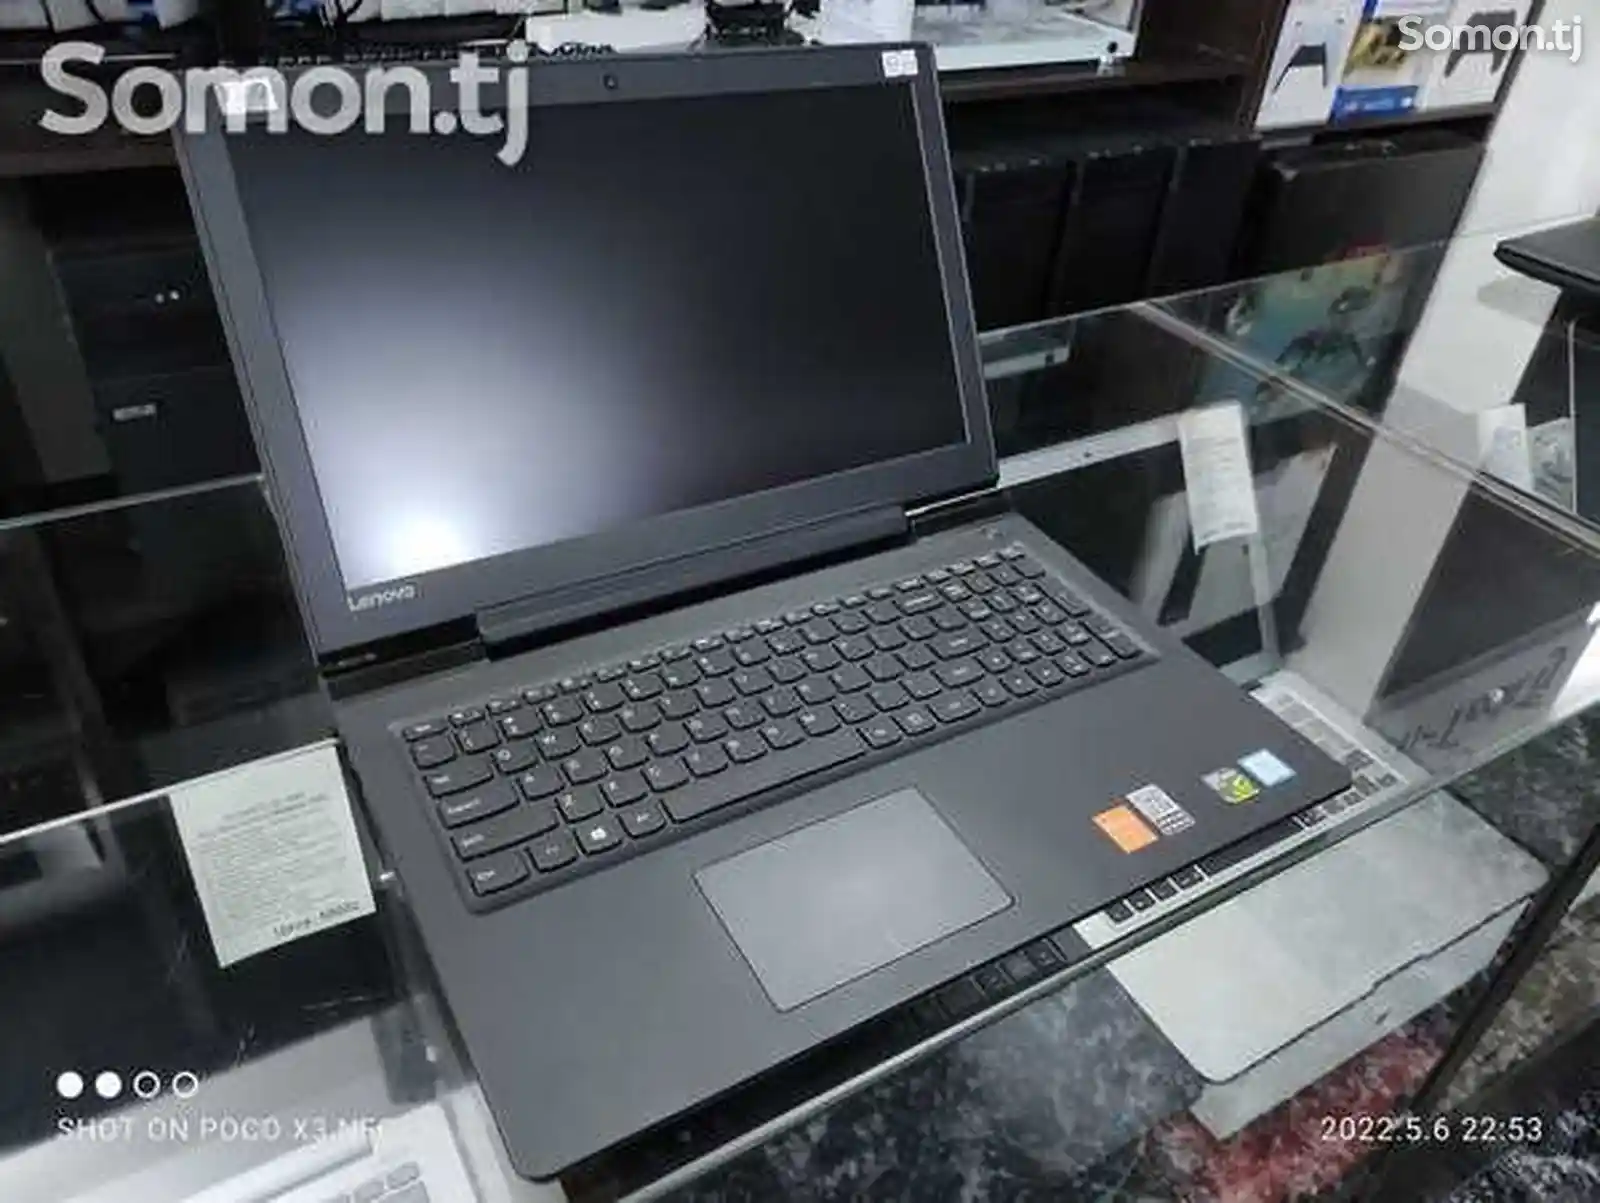 Игровой Ноутбук Lenovo Ideapad 700 Gaming Core i5-6300HQ GTX 950M 4GB 256GB 1TB-1